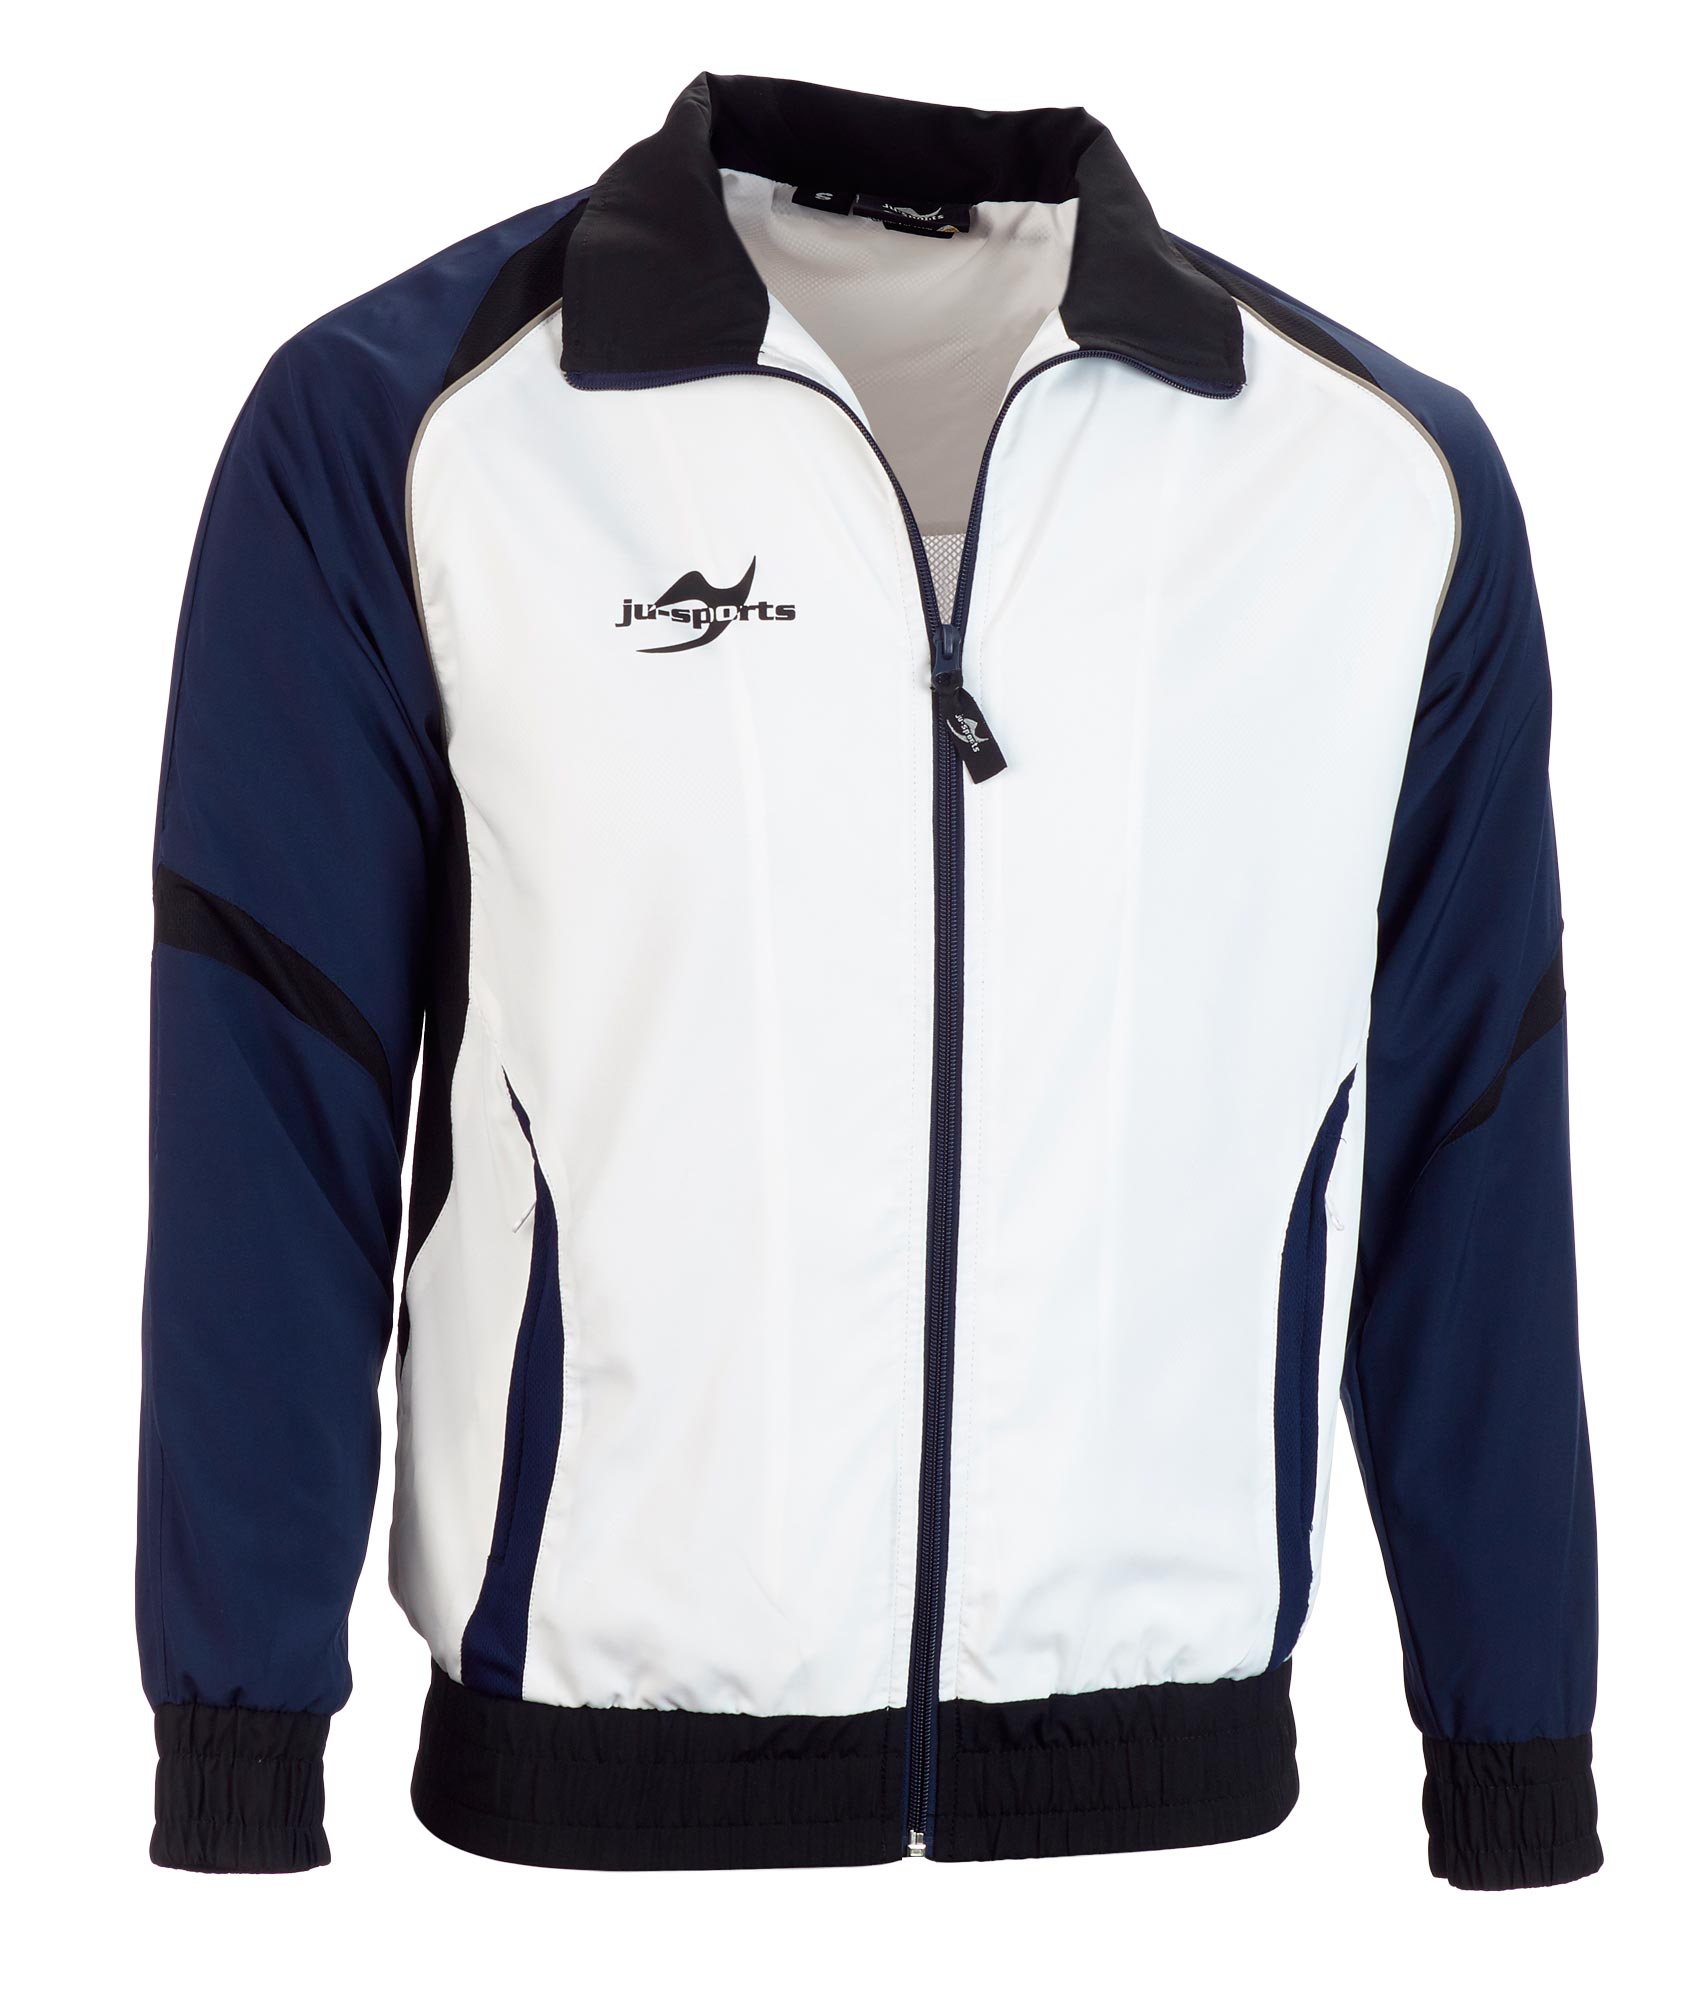 Ju-Sports C2 zip-up team jacket white/blue